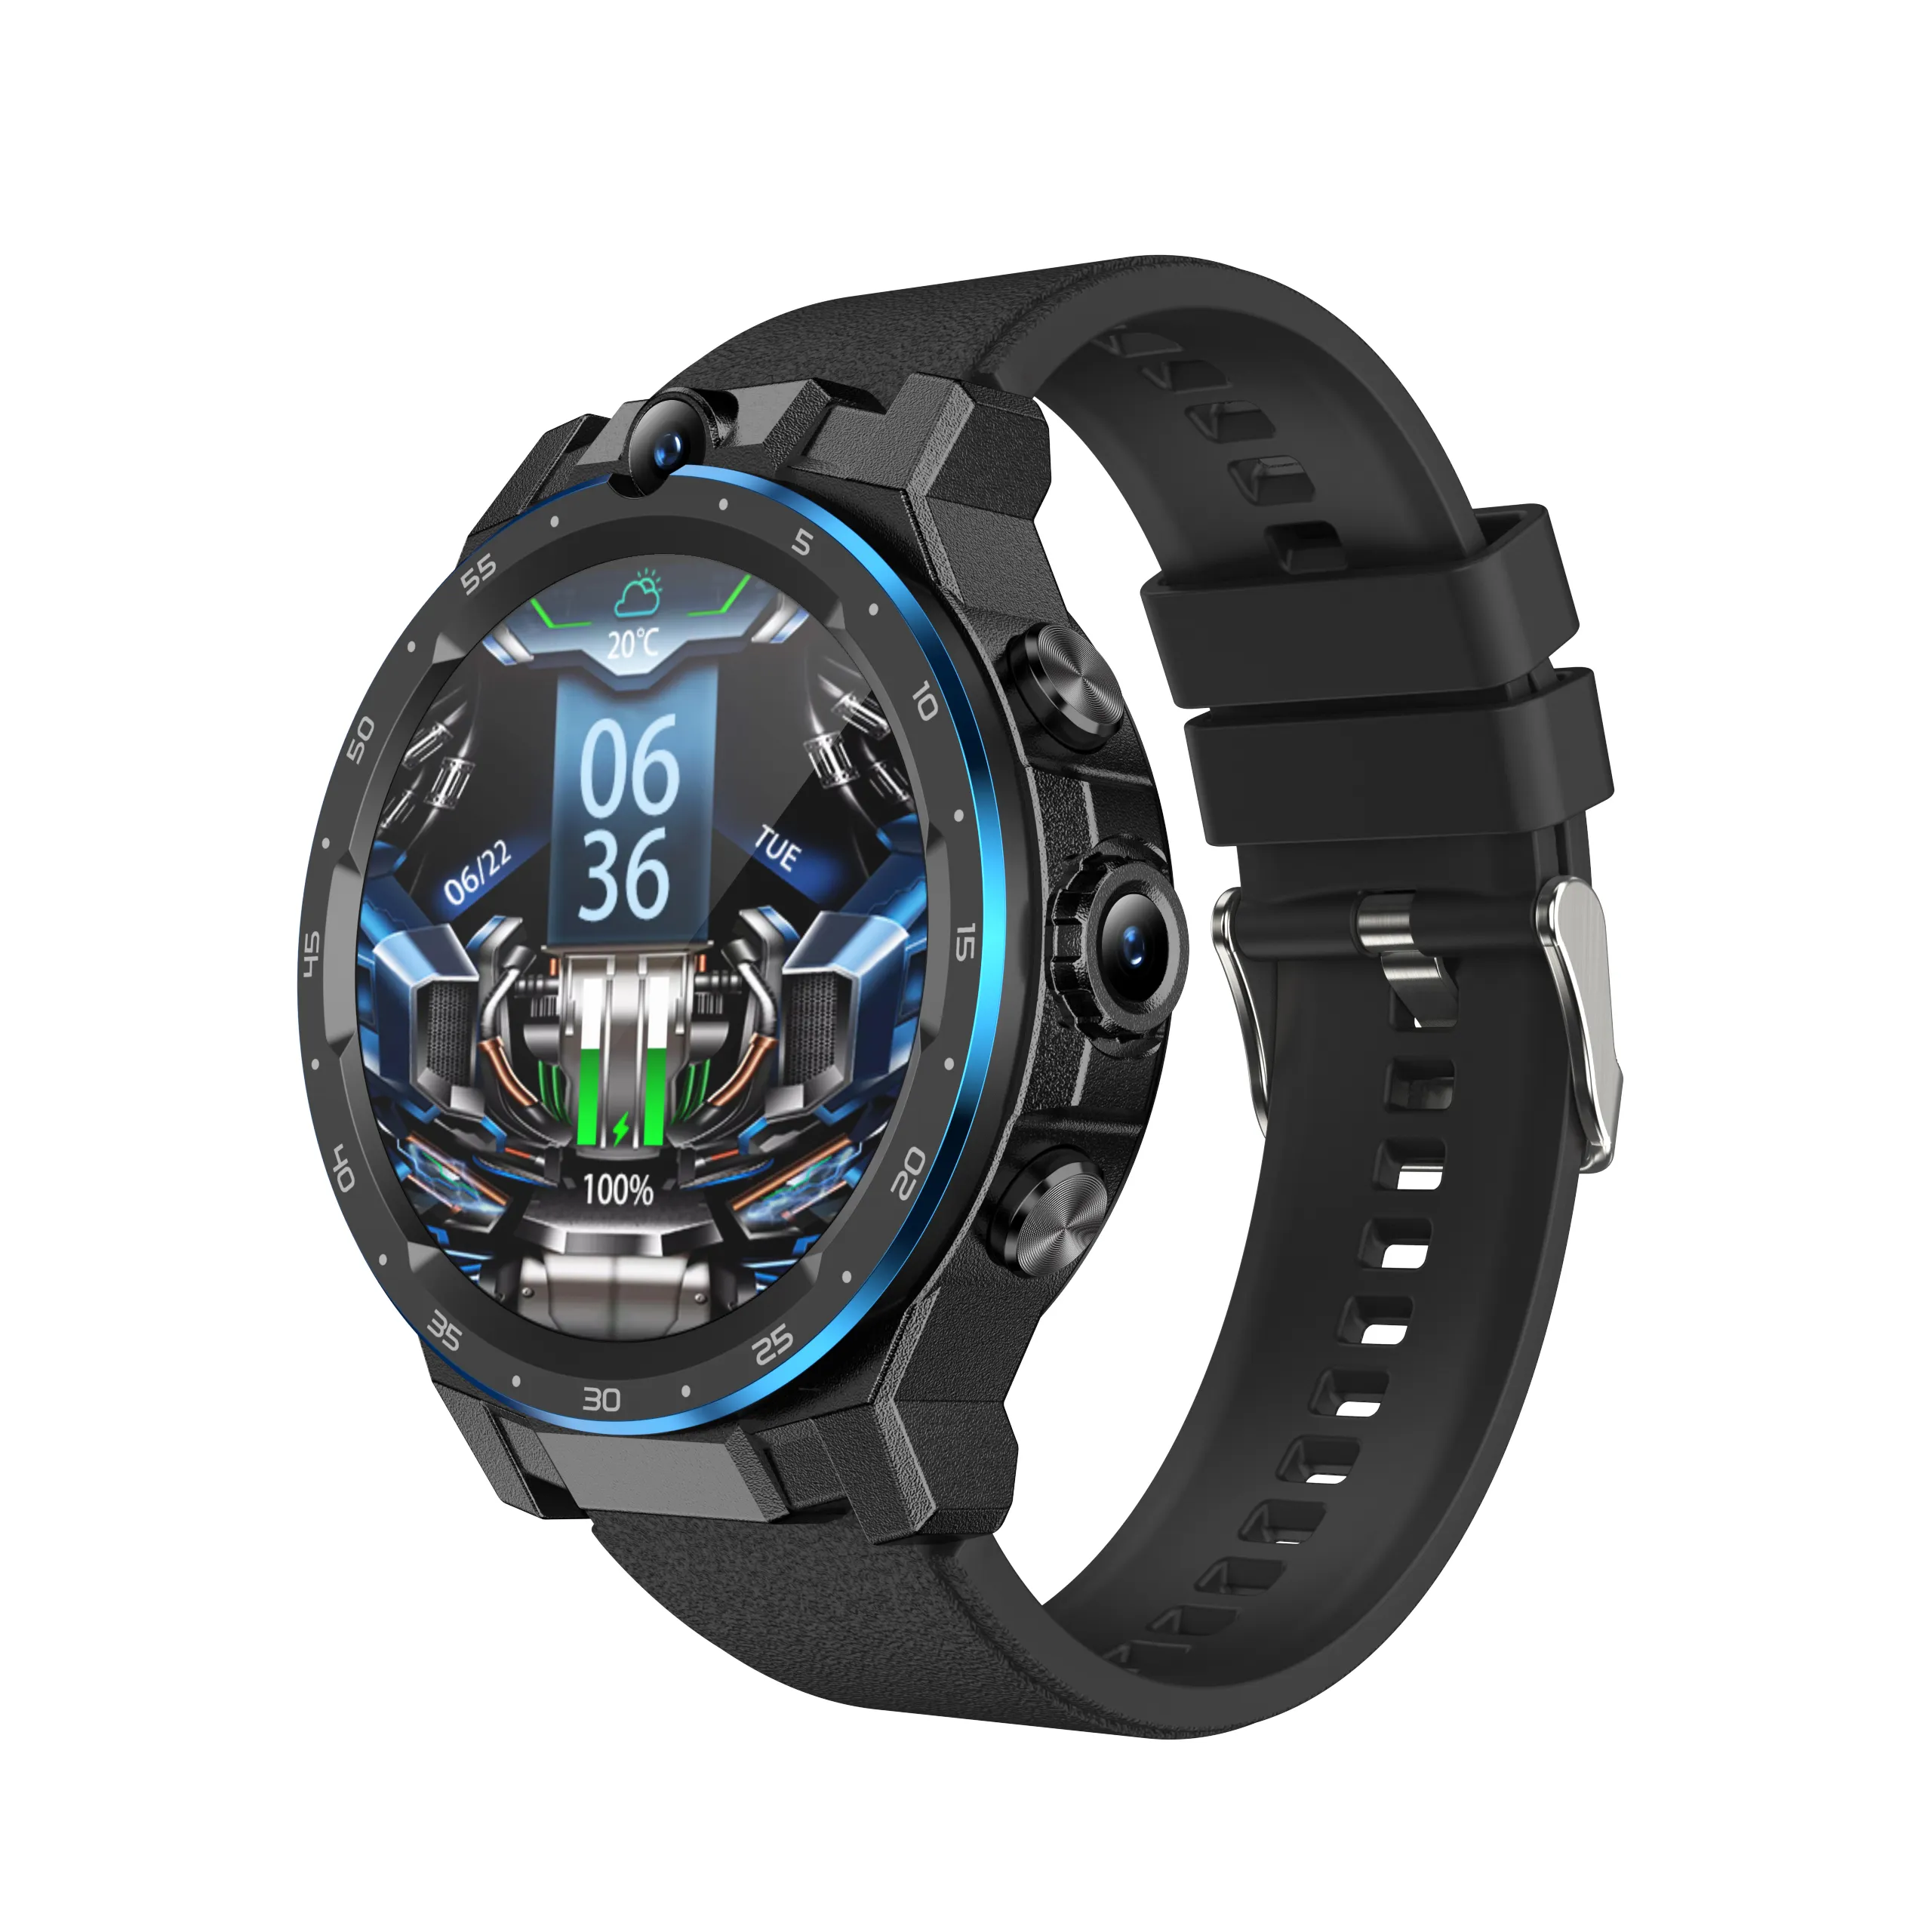 NEW A5 smart watch high quality smart electronic watches 860 Mah battery GPS+Beidou smart watch men